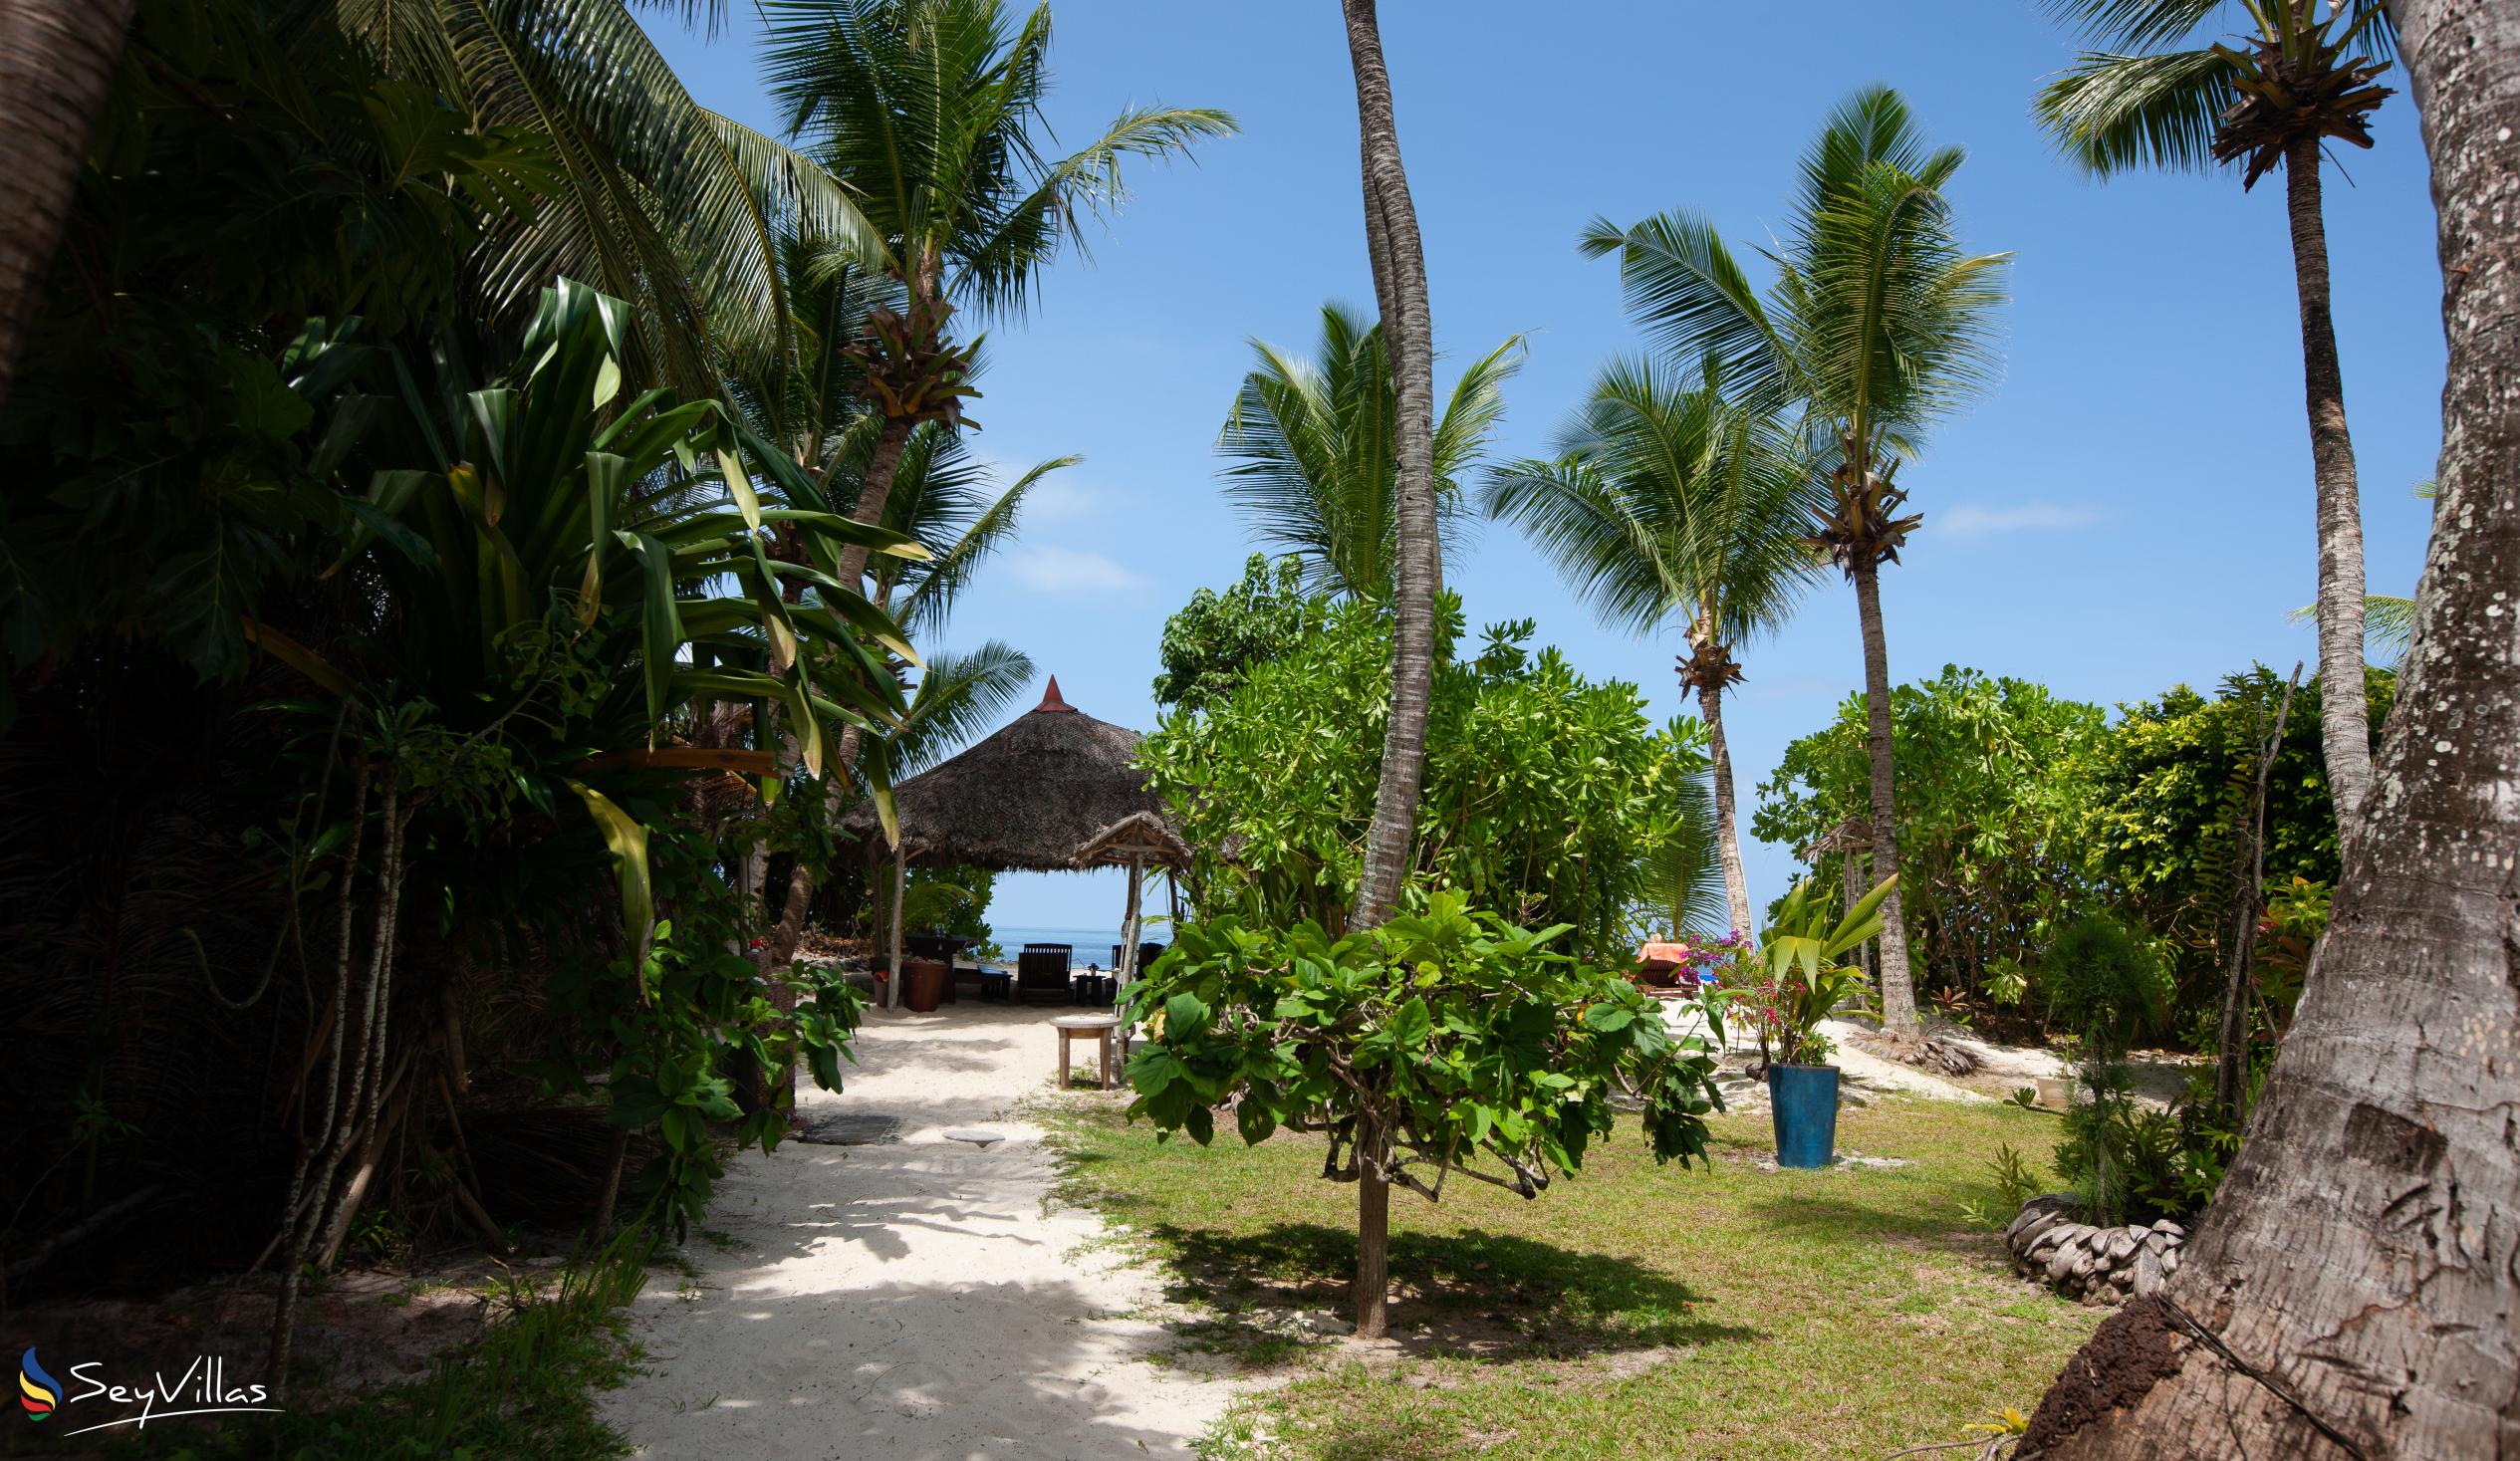 Photo 11: Villas du Voyageur - Outdoor area - Praslin (Seychelles)